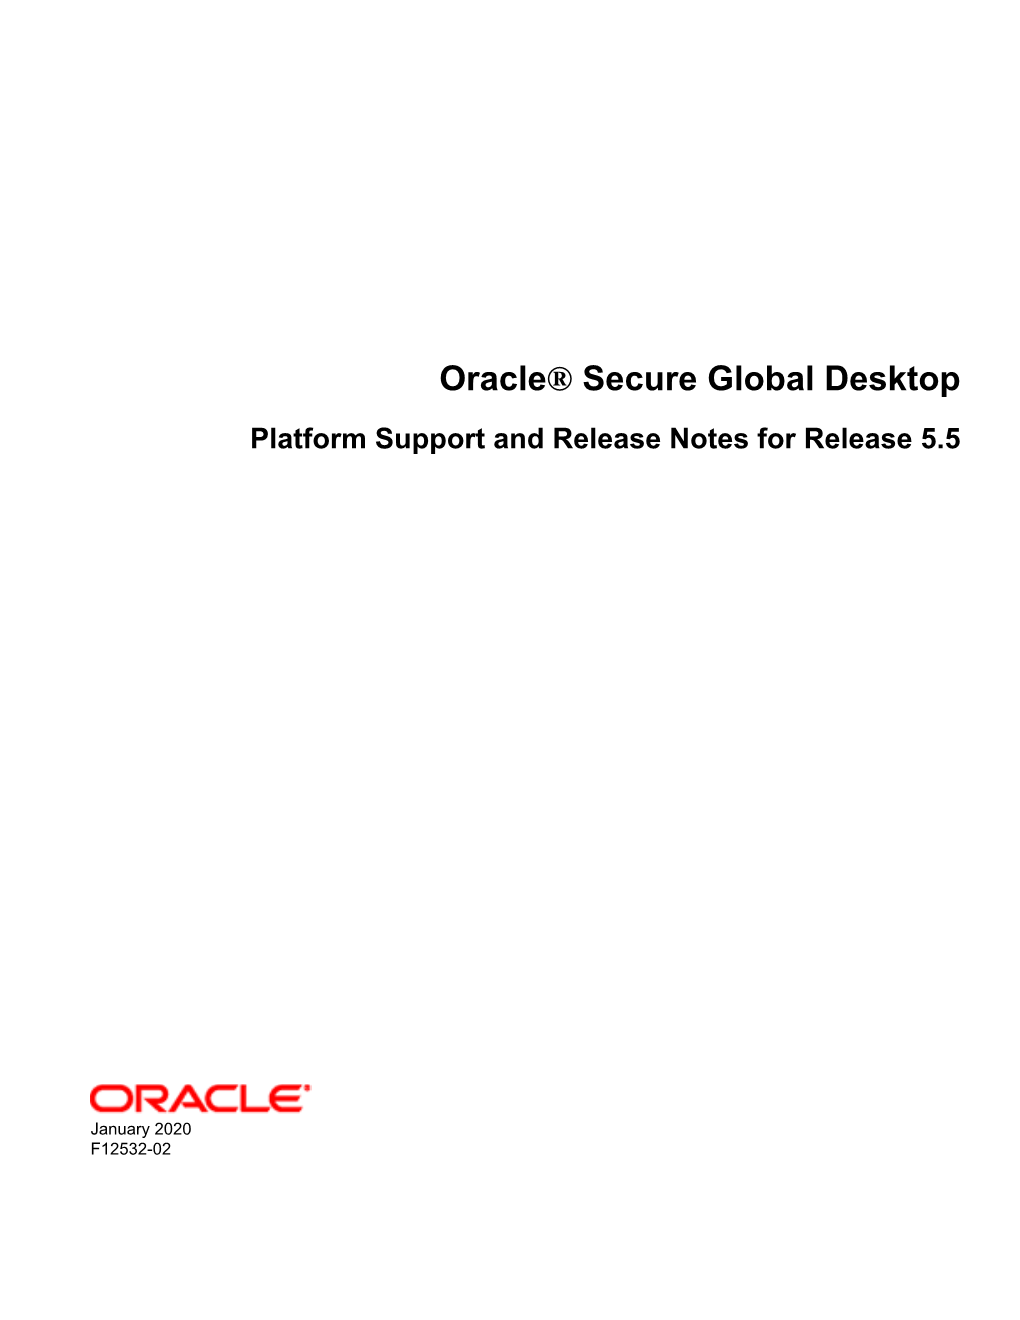 Oracle® Secure Global Desktop Platform Support and Release Notes for Release 5.5